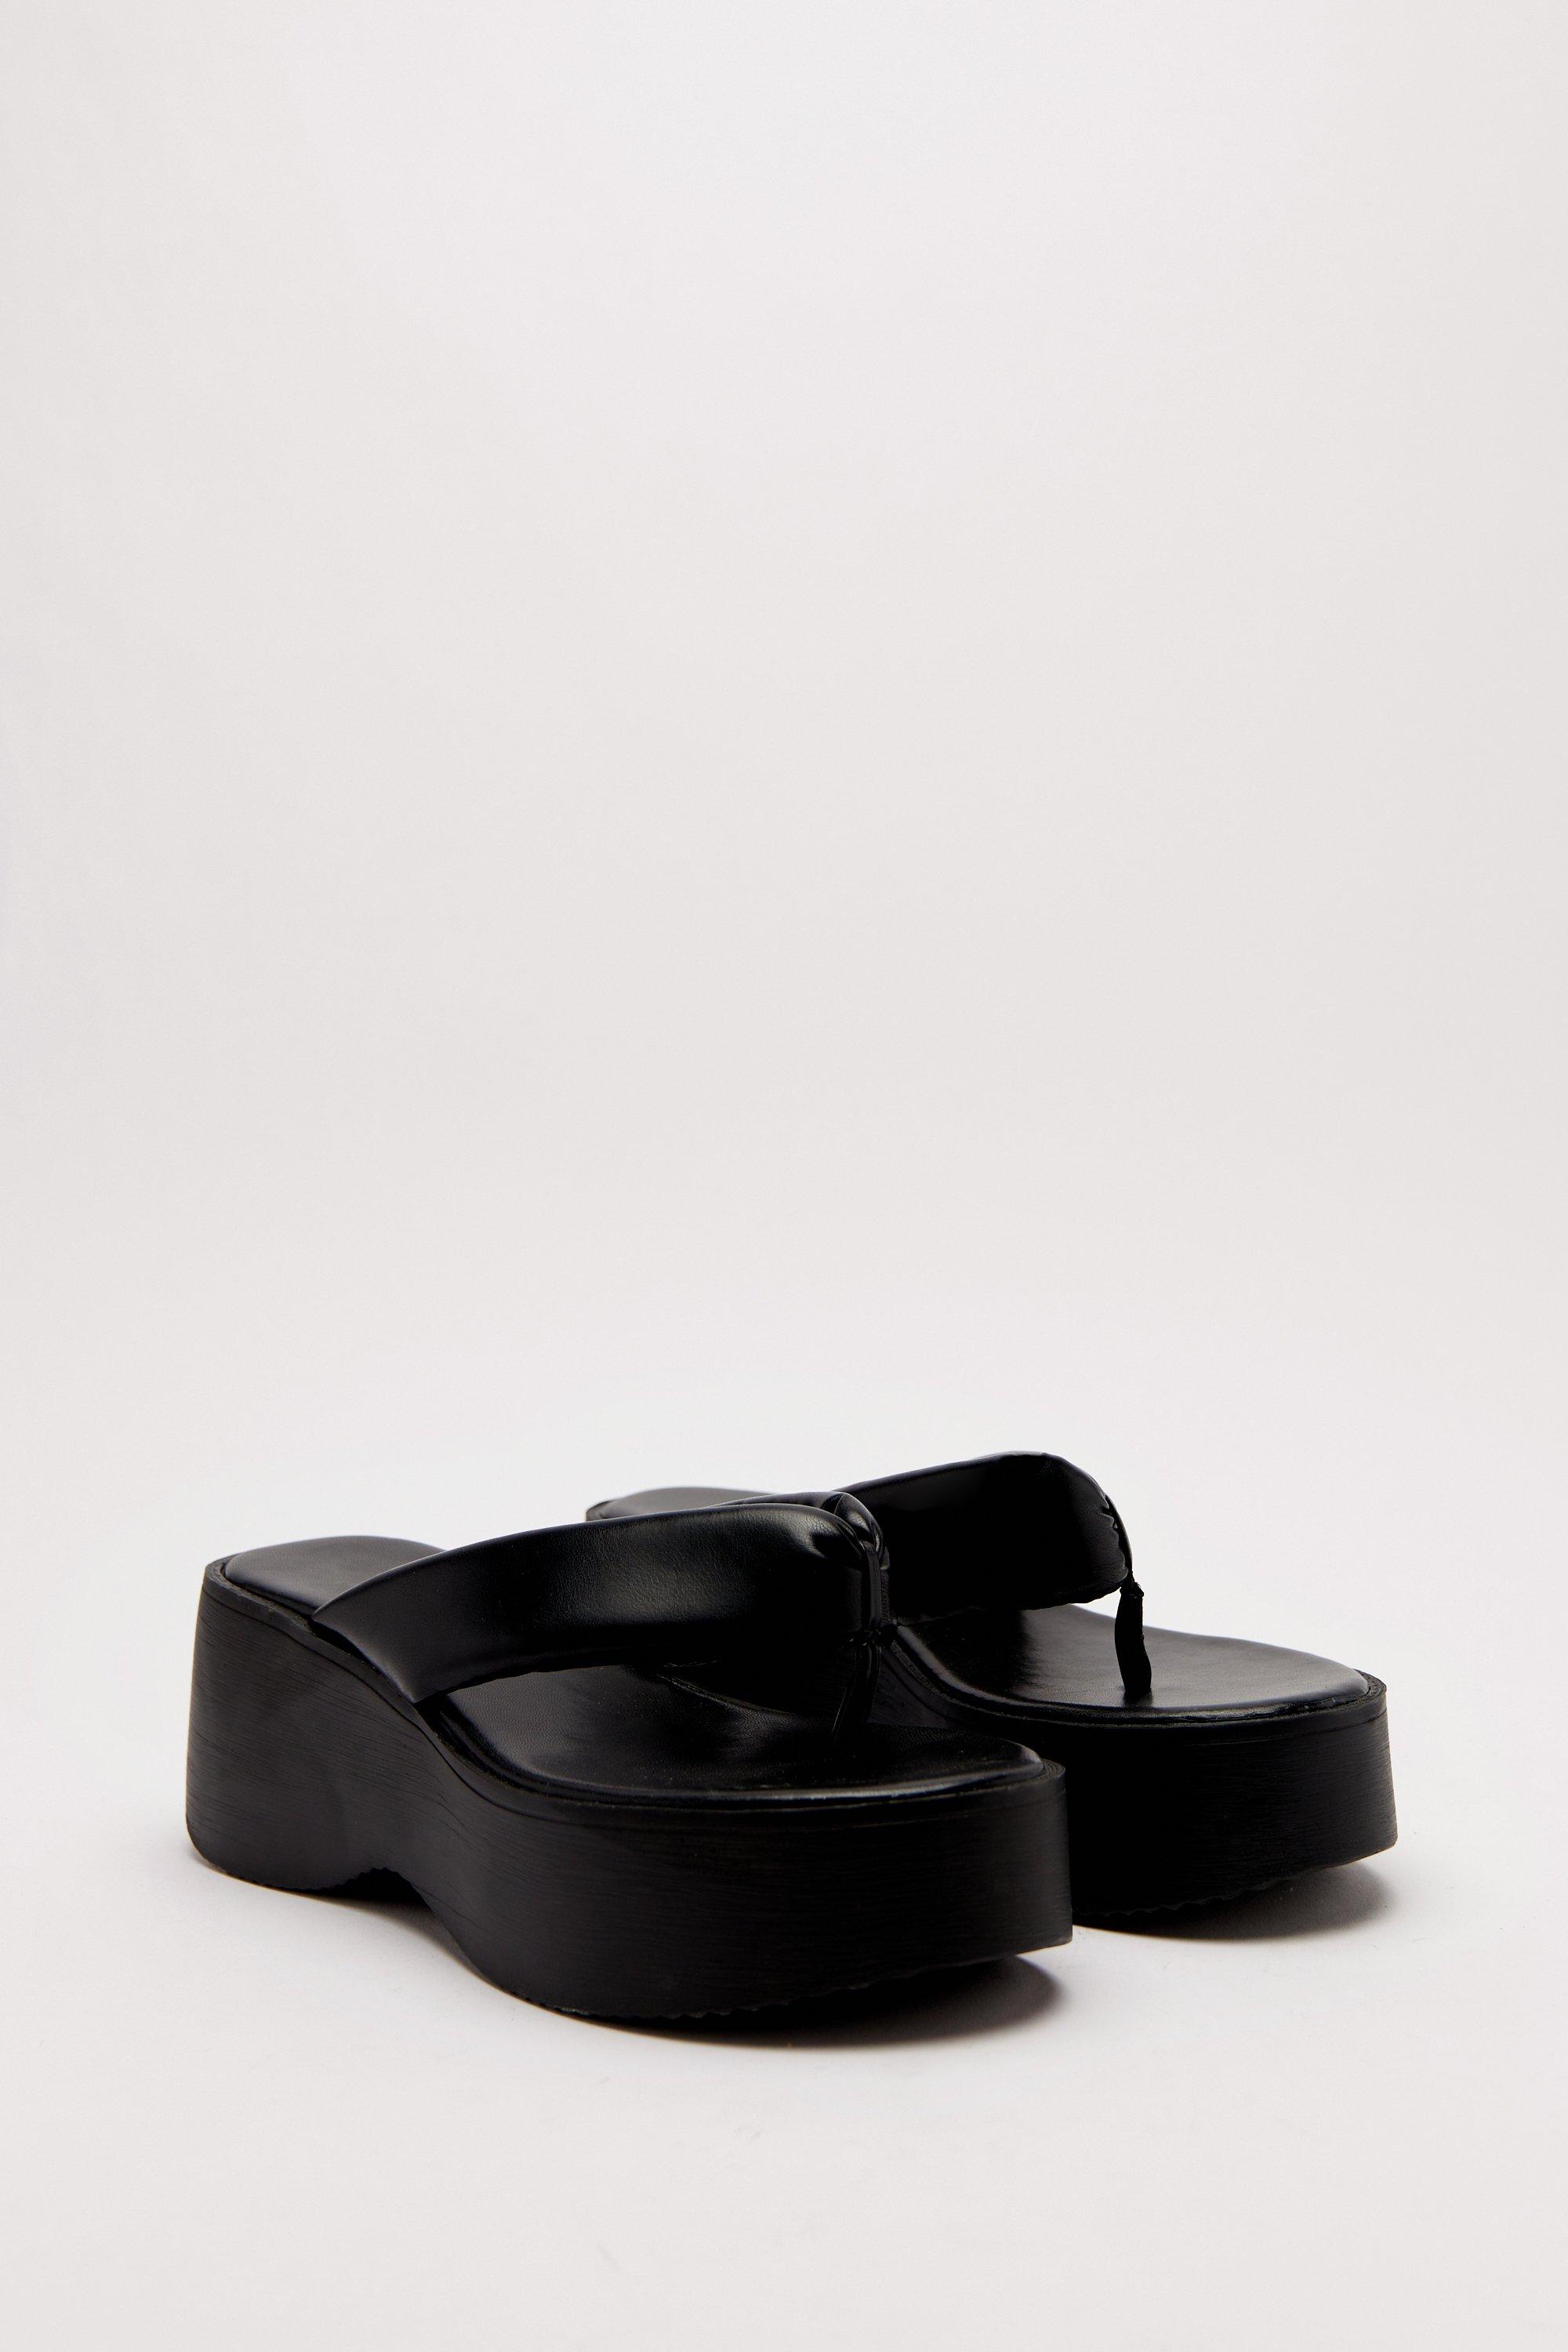 https://media.boohoo.com/i/boohoo/bgg15586_black_xl_3/female-black-faux-leather-platform-flip-flop-sandals